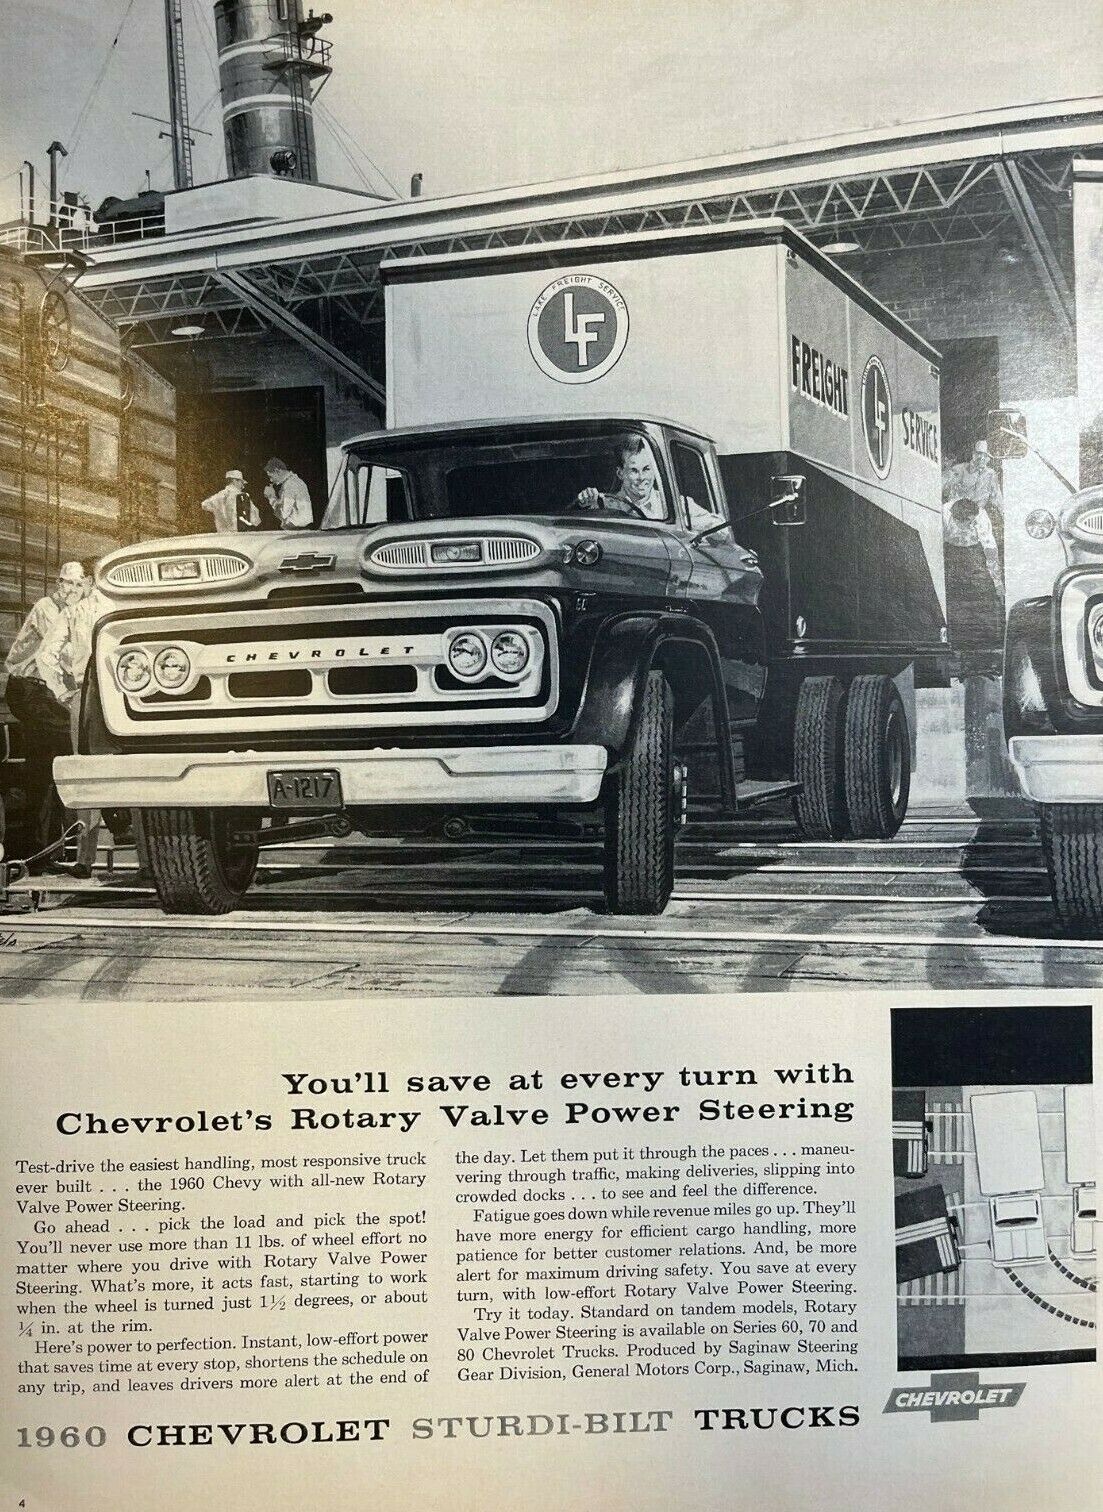 1960 Advertisement Chevrolet Sturdi-Built Trucks